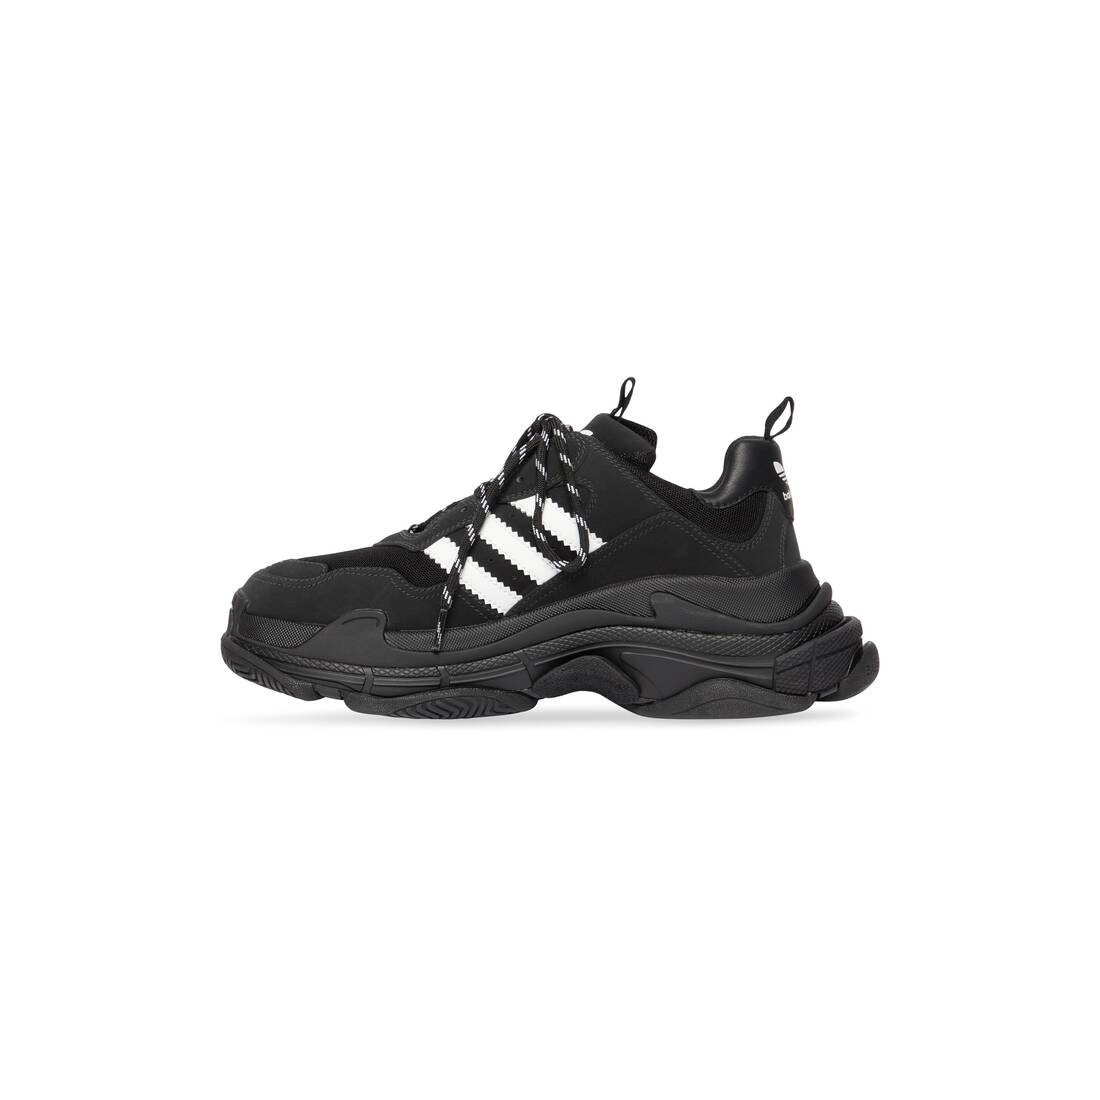 Men's Balenciaga / Adidas Triple S Sneaker in Black - 4